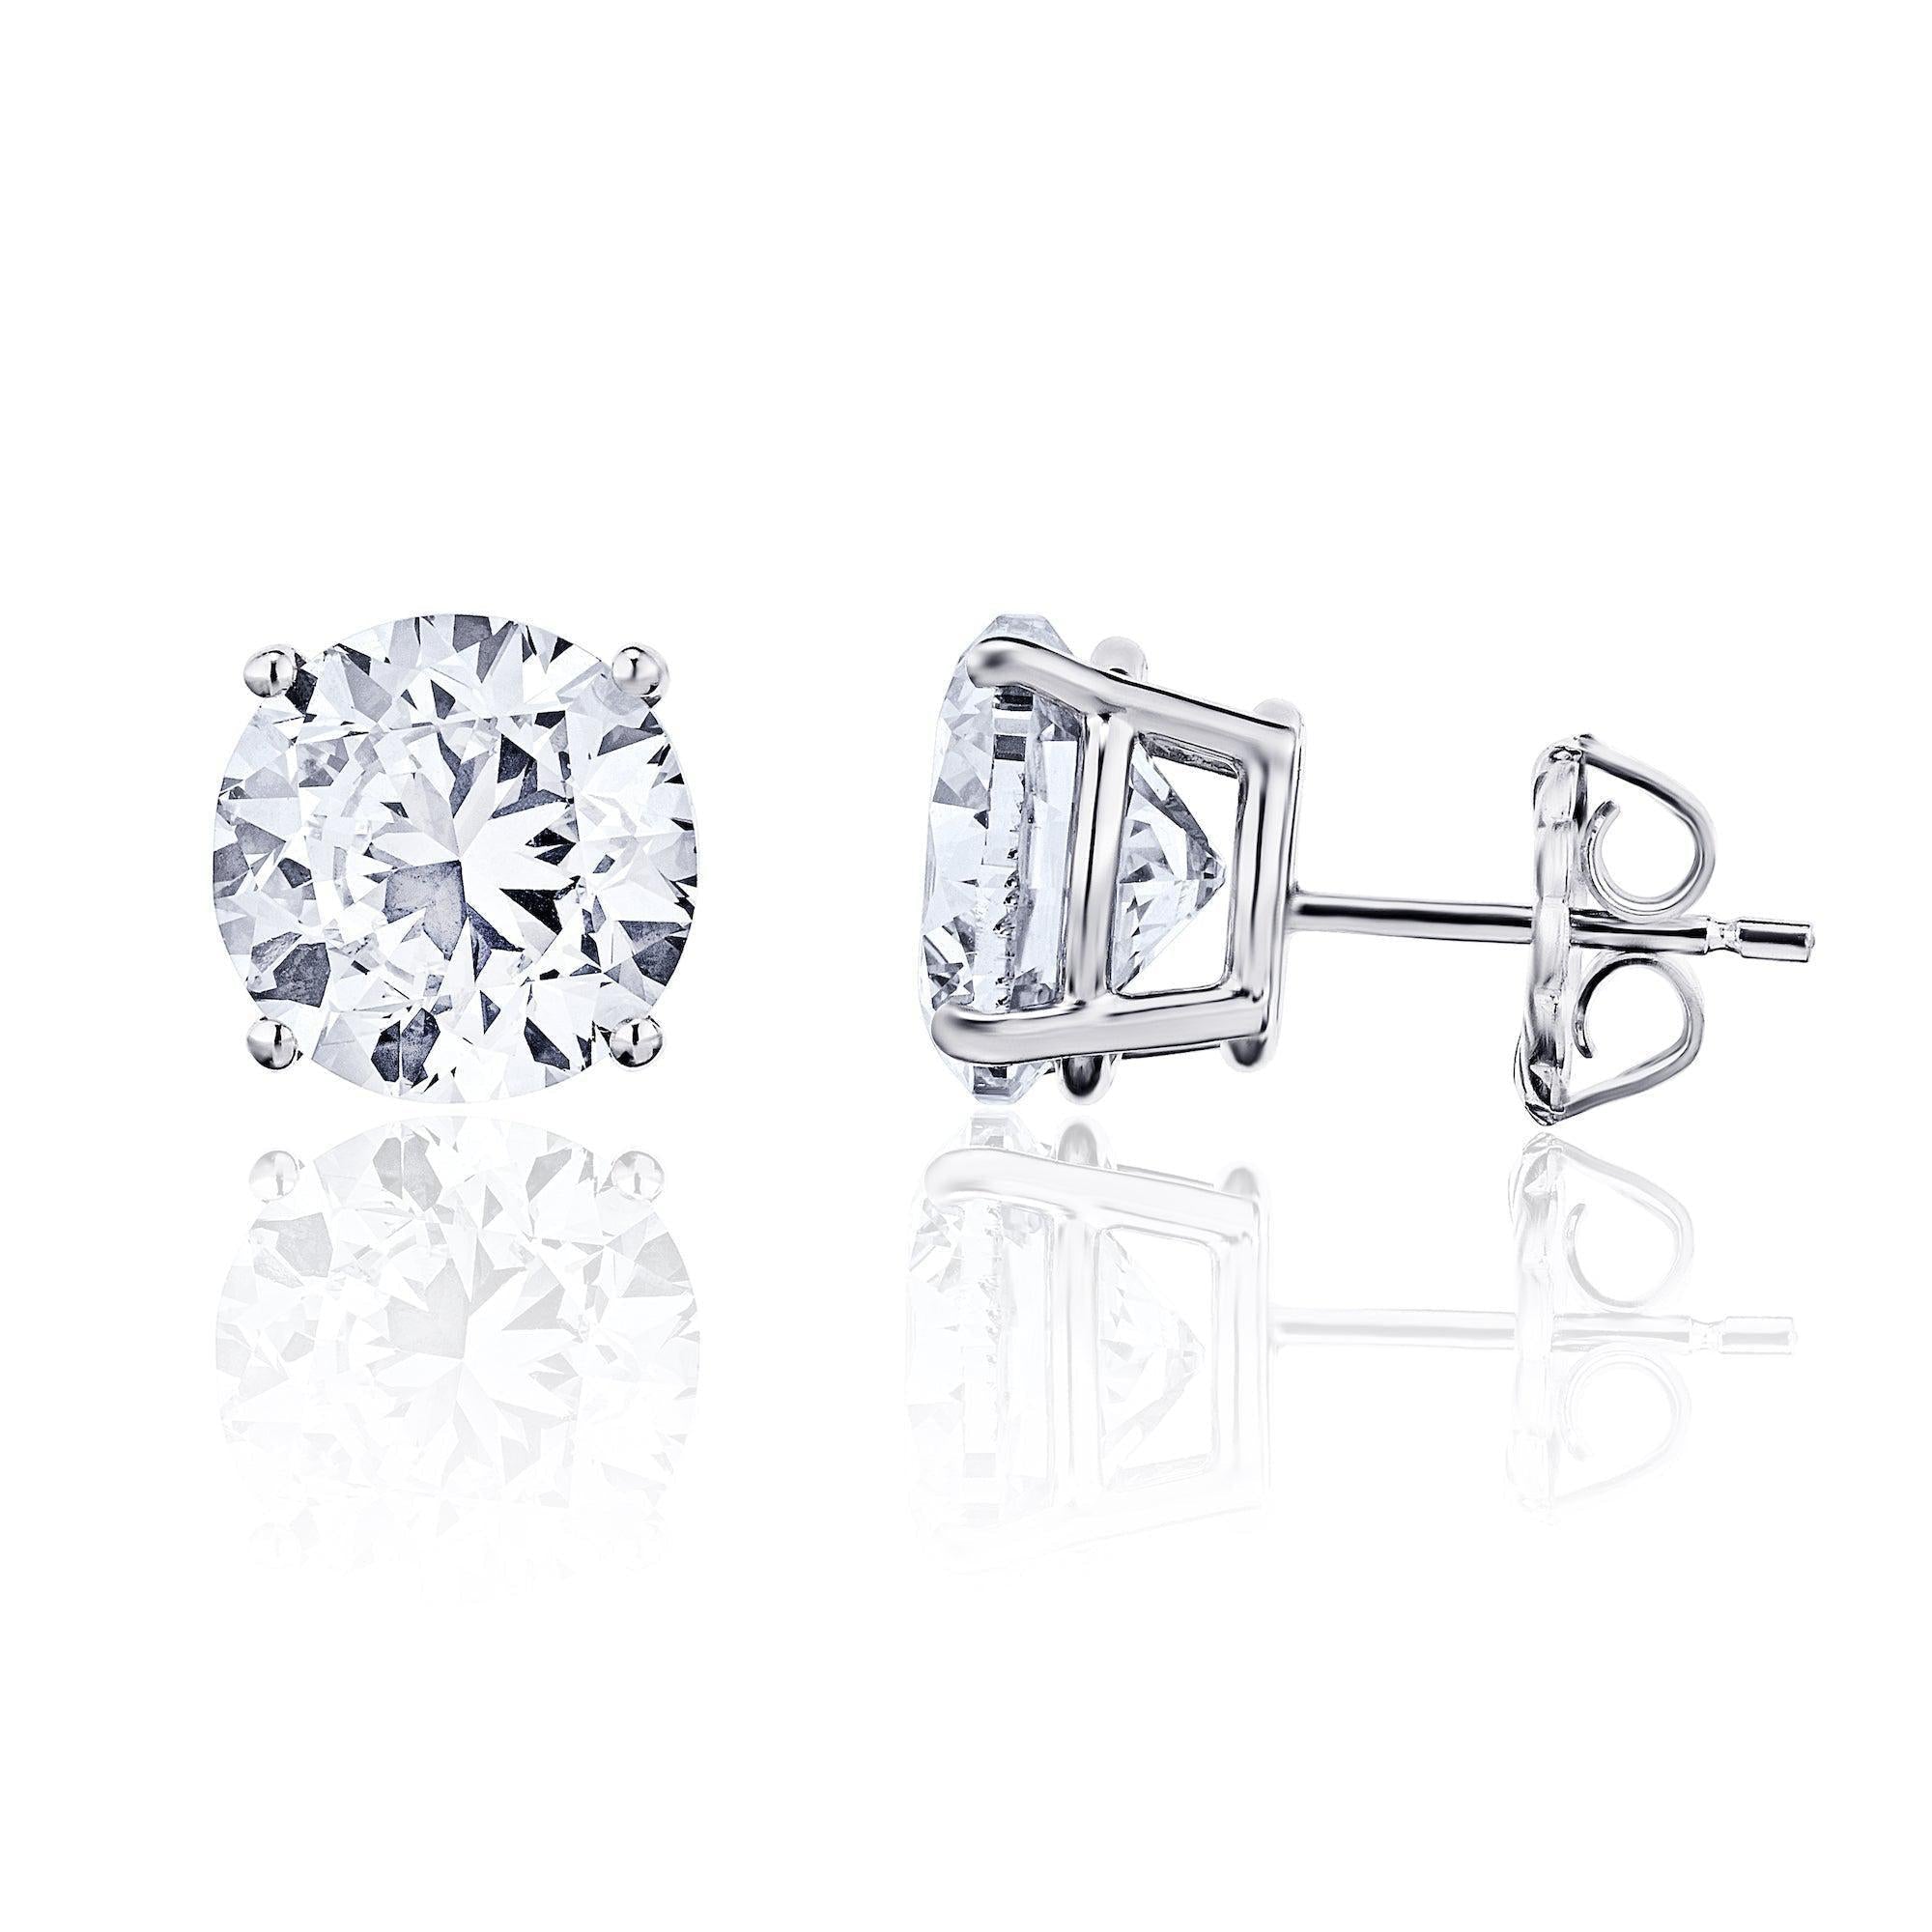 6.00 carat total 3ct each Lab Grown Diamond Stud Earrings in 14k White Gold - 4 Prong